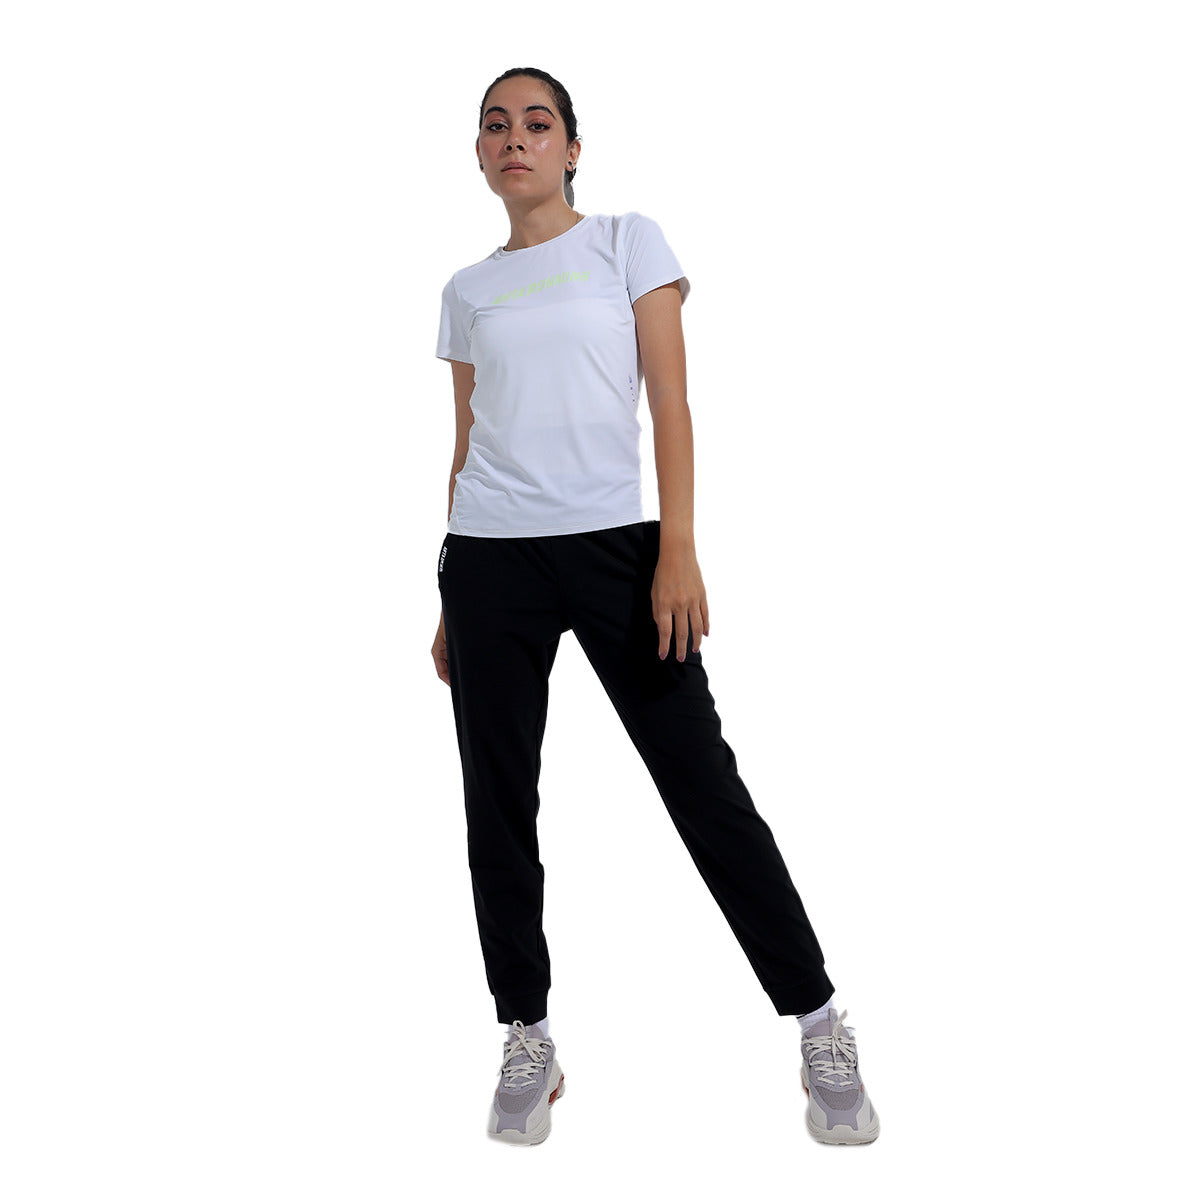 Anta Sports T-Shirt For Women, White